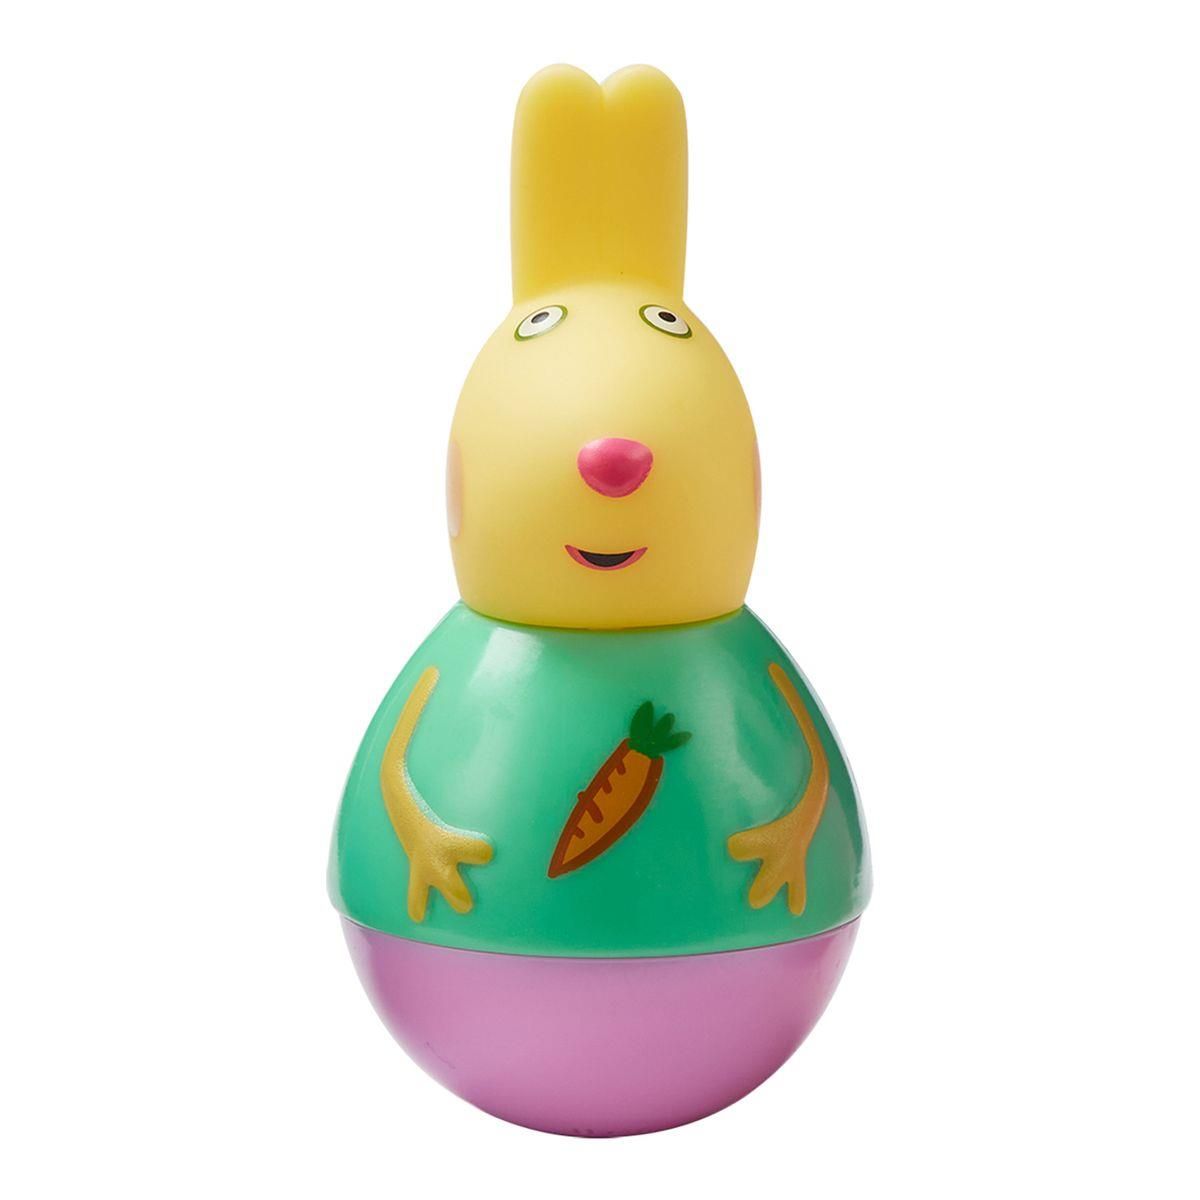 Prasátko Peppa - figurka zajíček Rebecca - Weebles - Roly Poly TM Toys